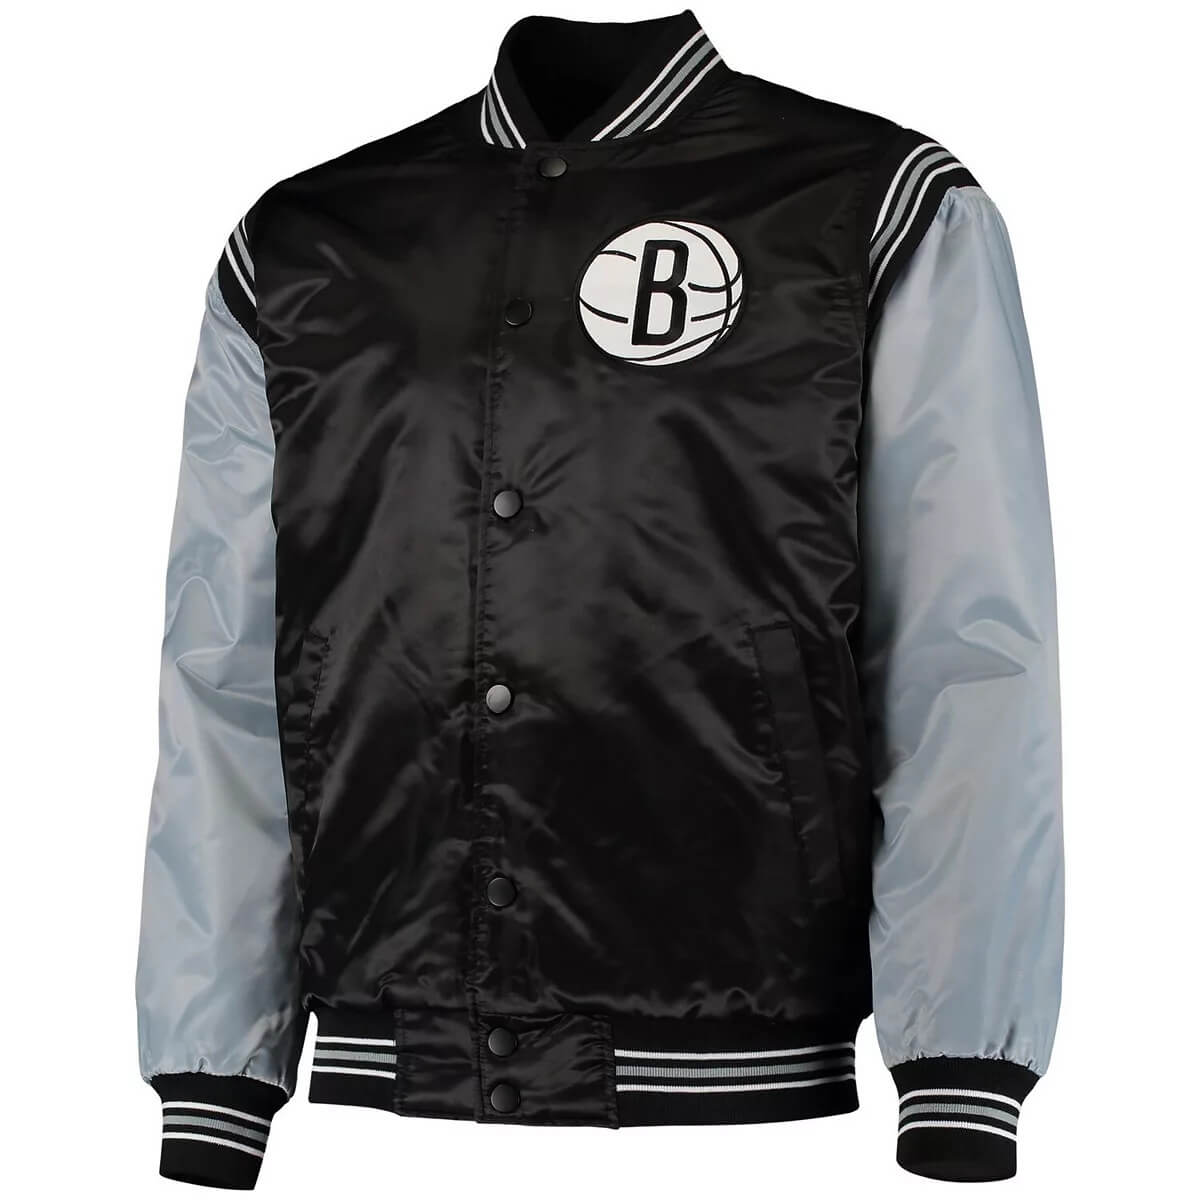 NBA Brooklyn Nets Black Satin Jacket